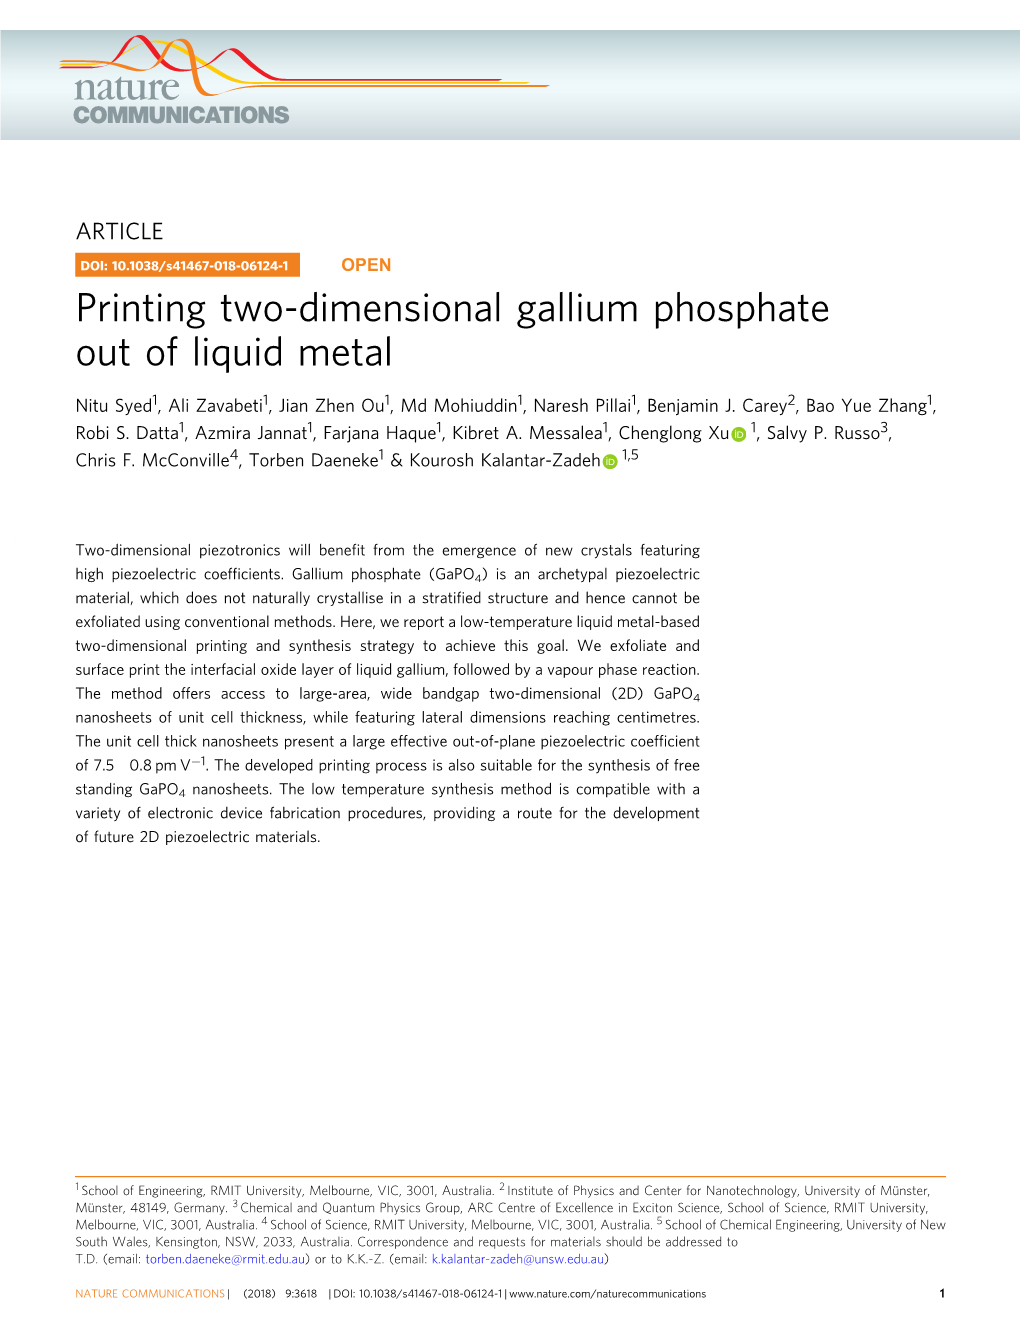 Printing Two-Dimensional Gallium Phosphate out of Liquid Metal